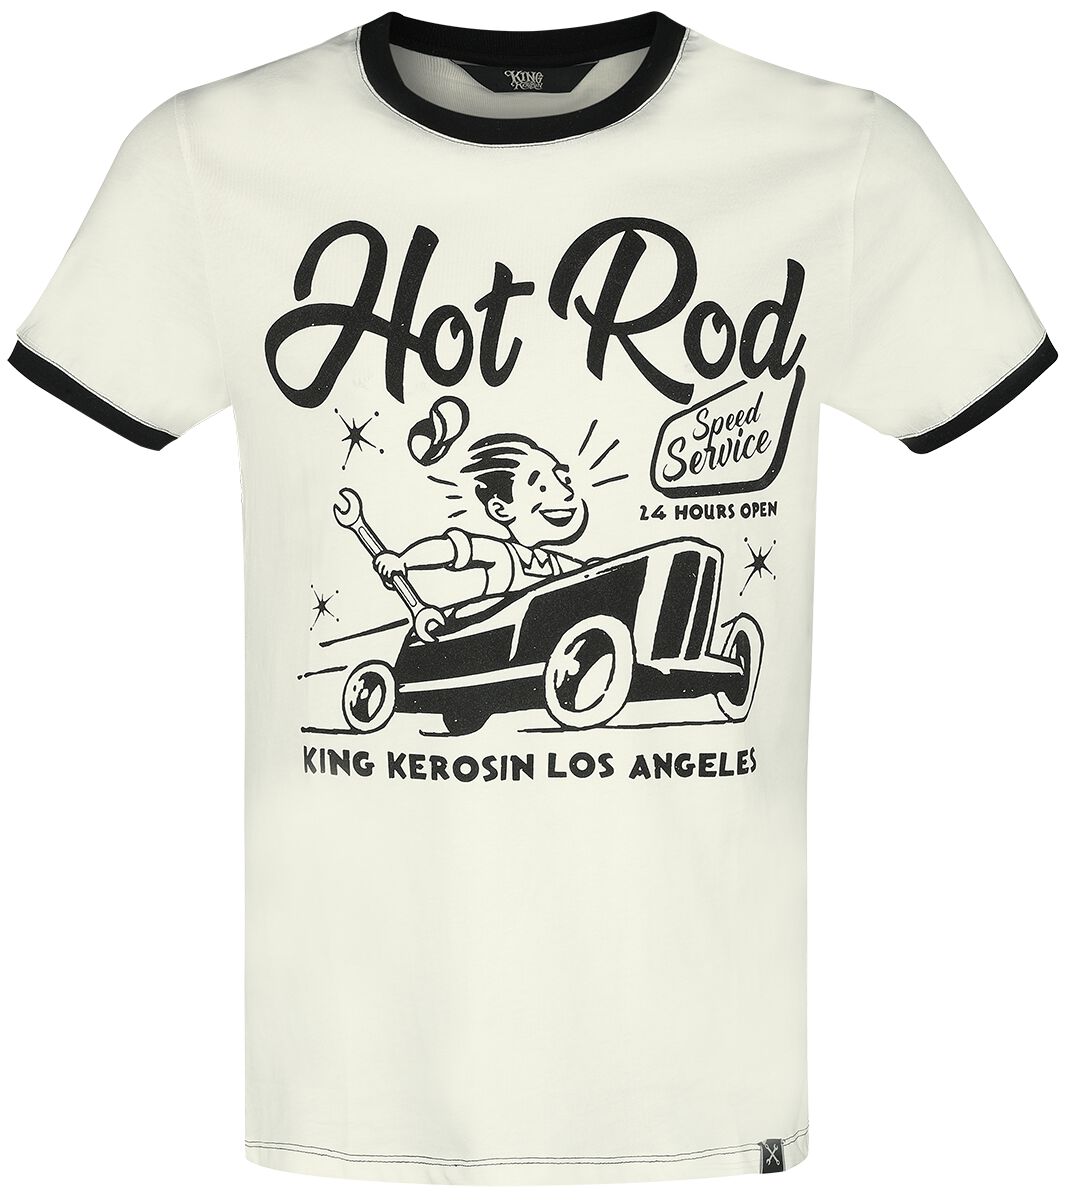 King Kerosin Oldschool Contrast T-Shirt Hotrod Speed T-Shirt black white